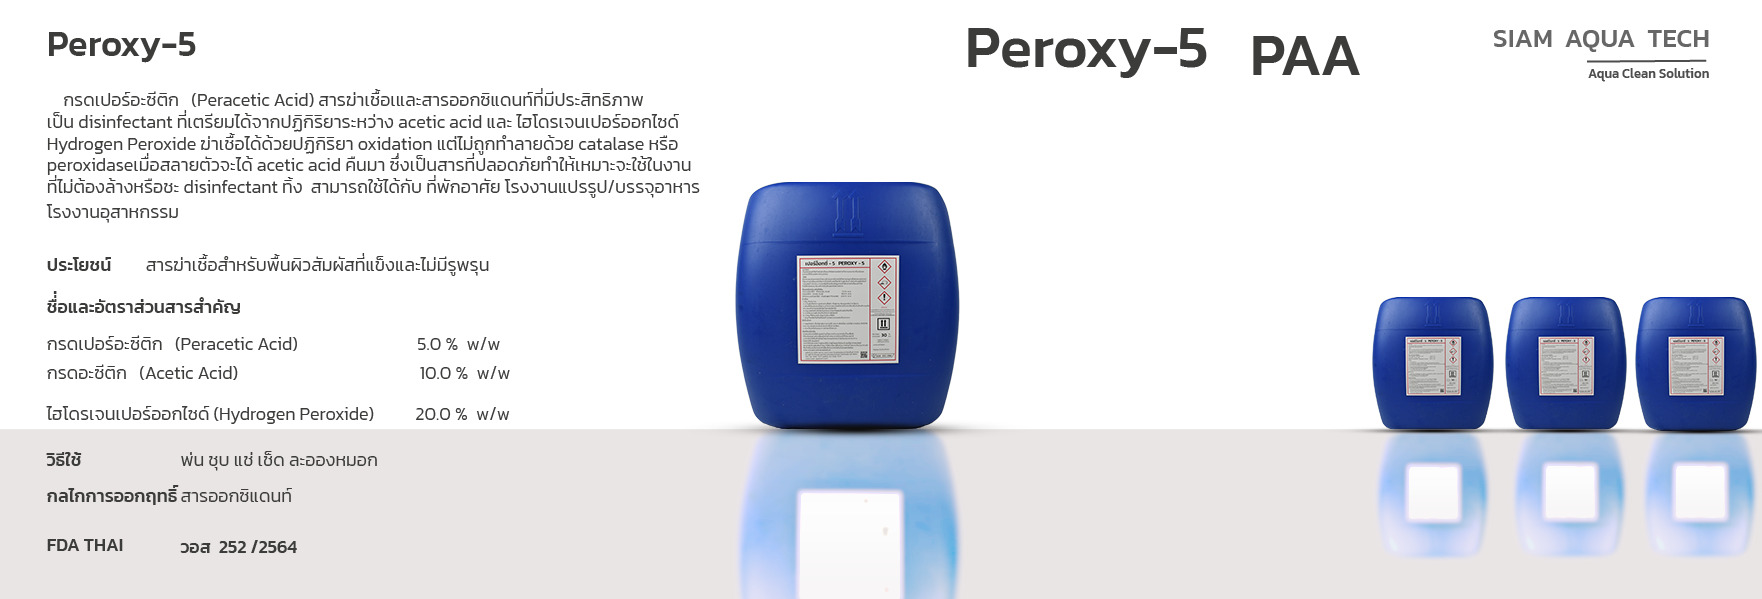 peroxy-5